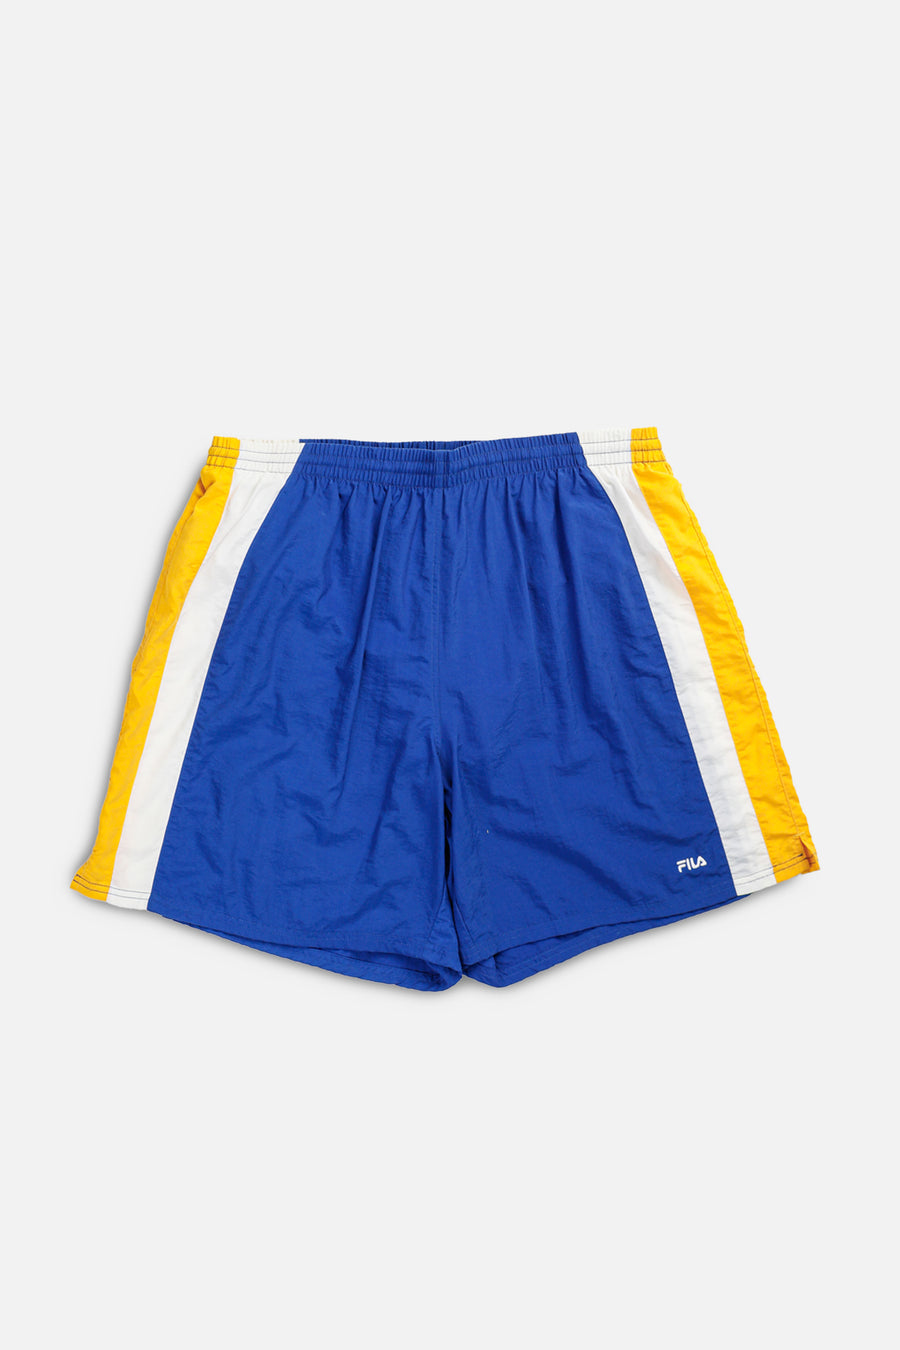 Vintage FILA Shorts - XXL